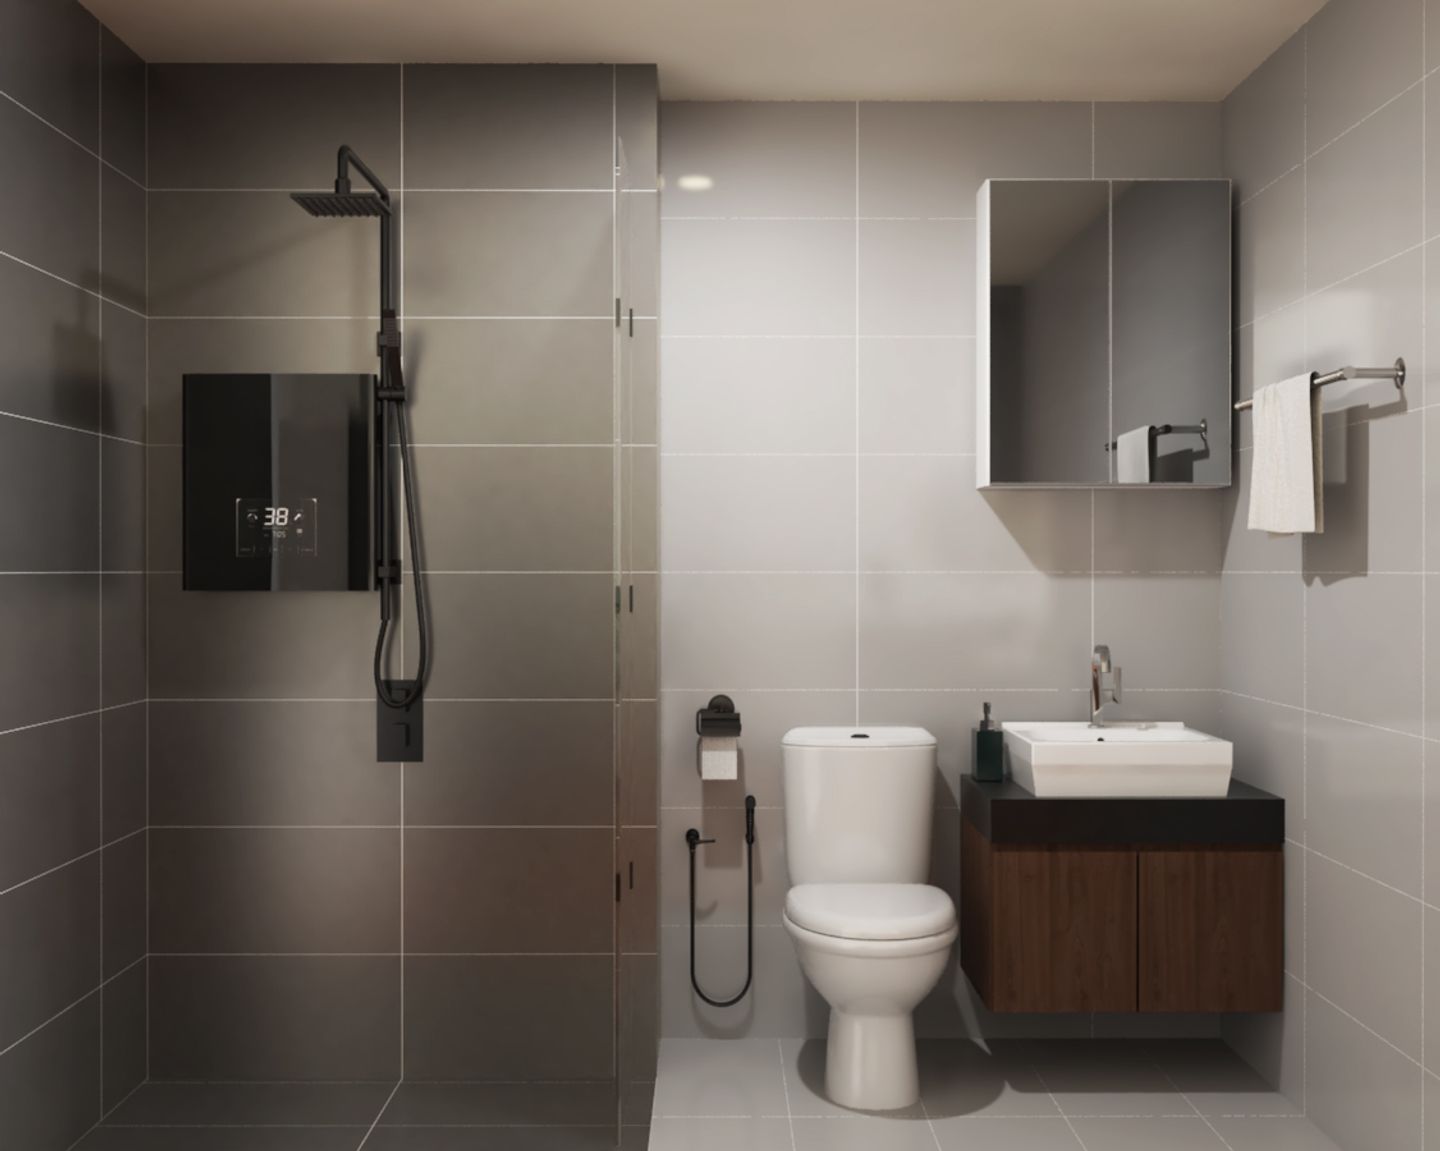 Bathroom Interior Design With Dark And Light Grey Tiles - Livspace